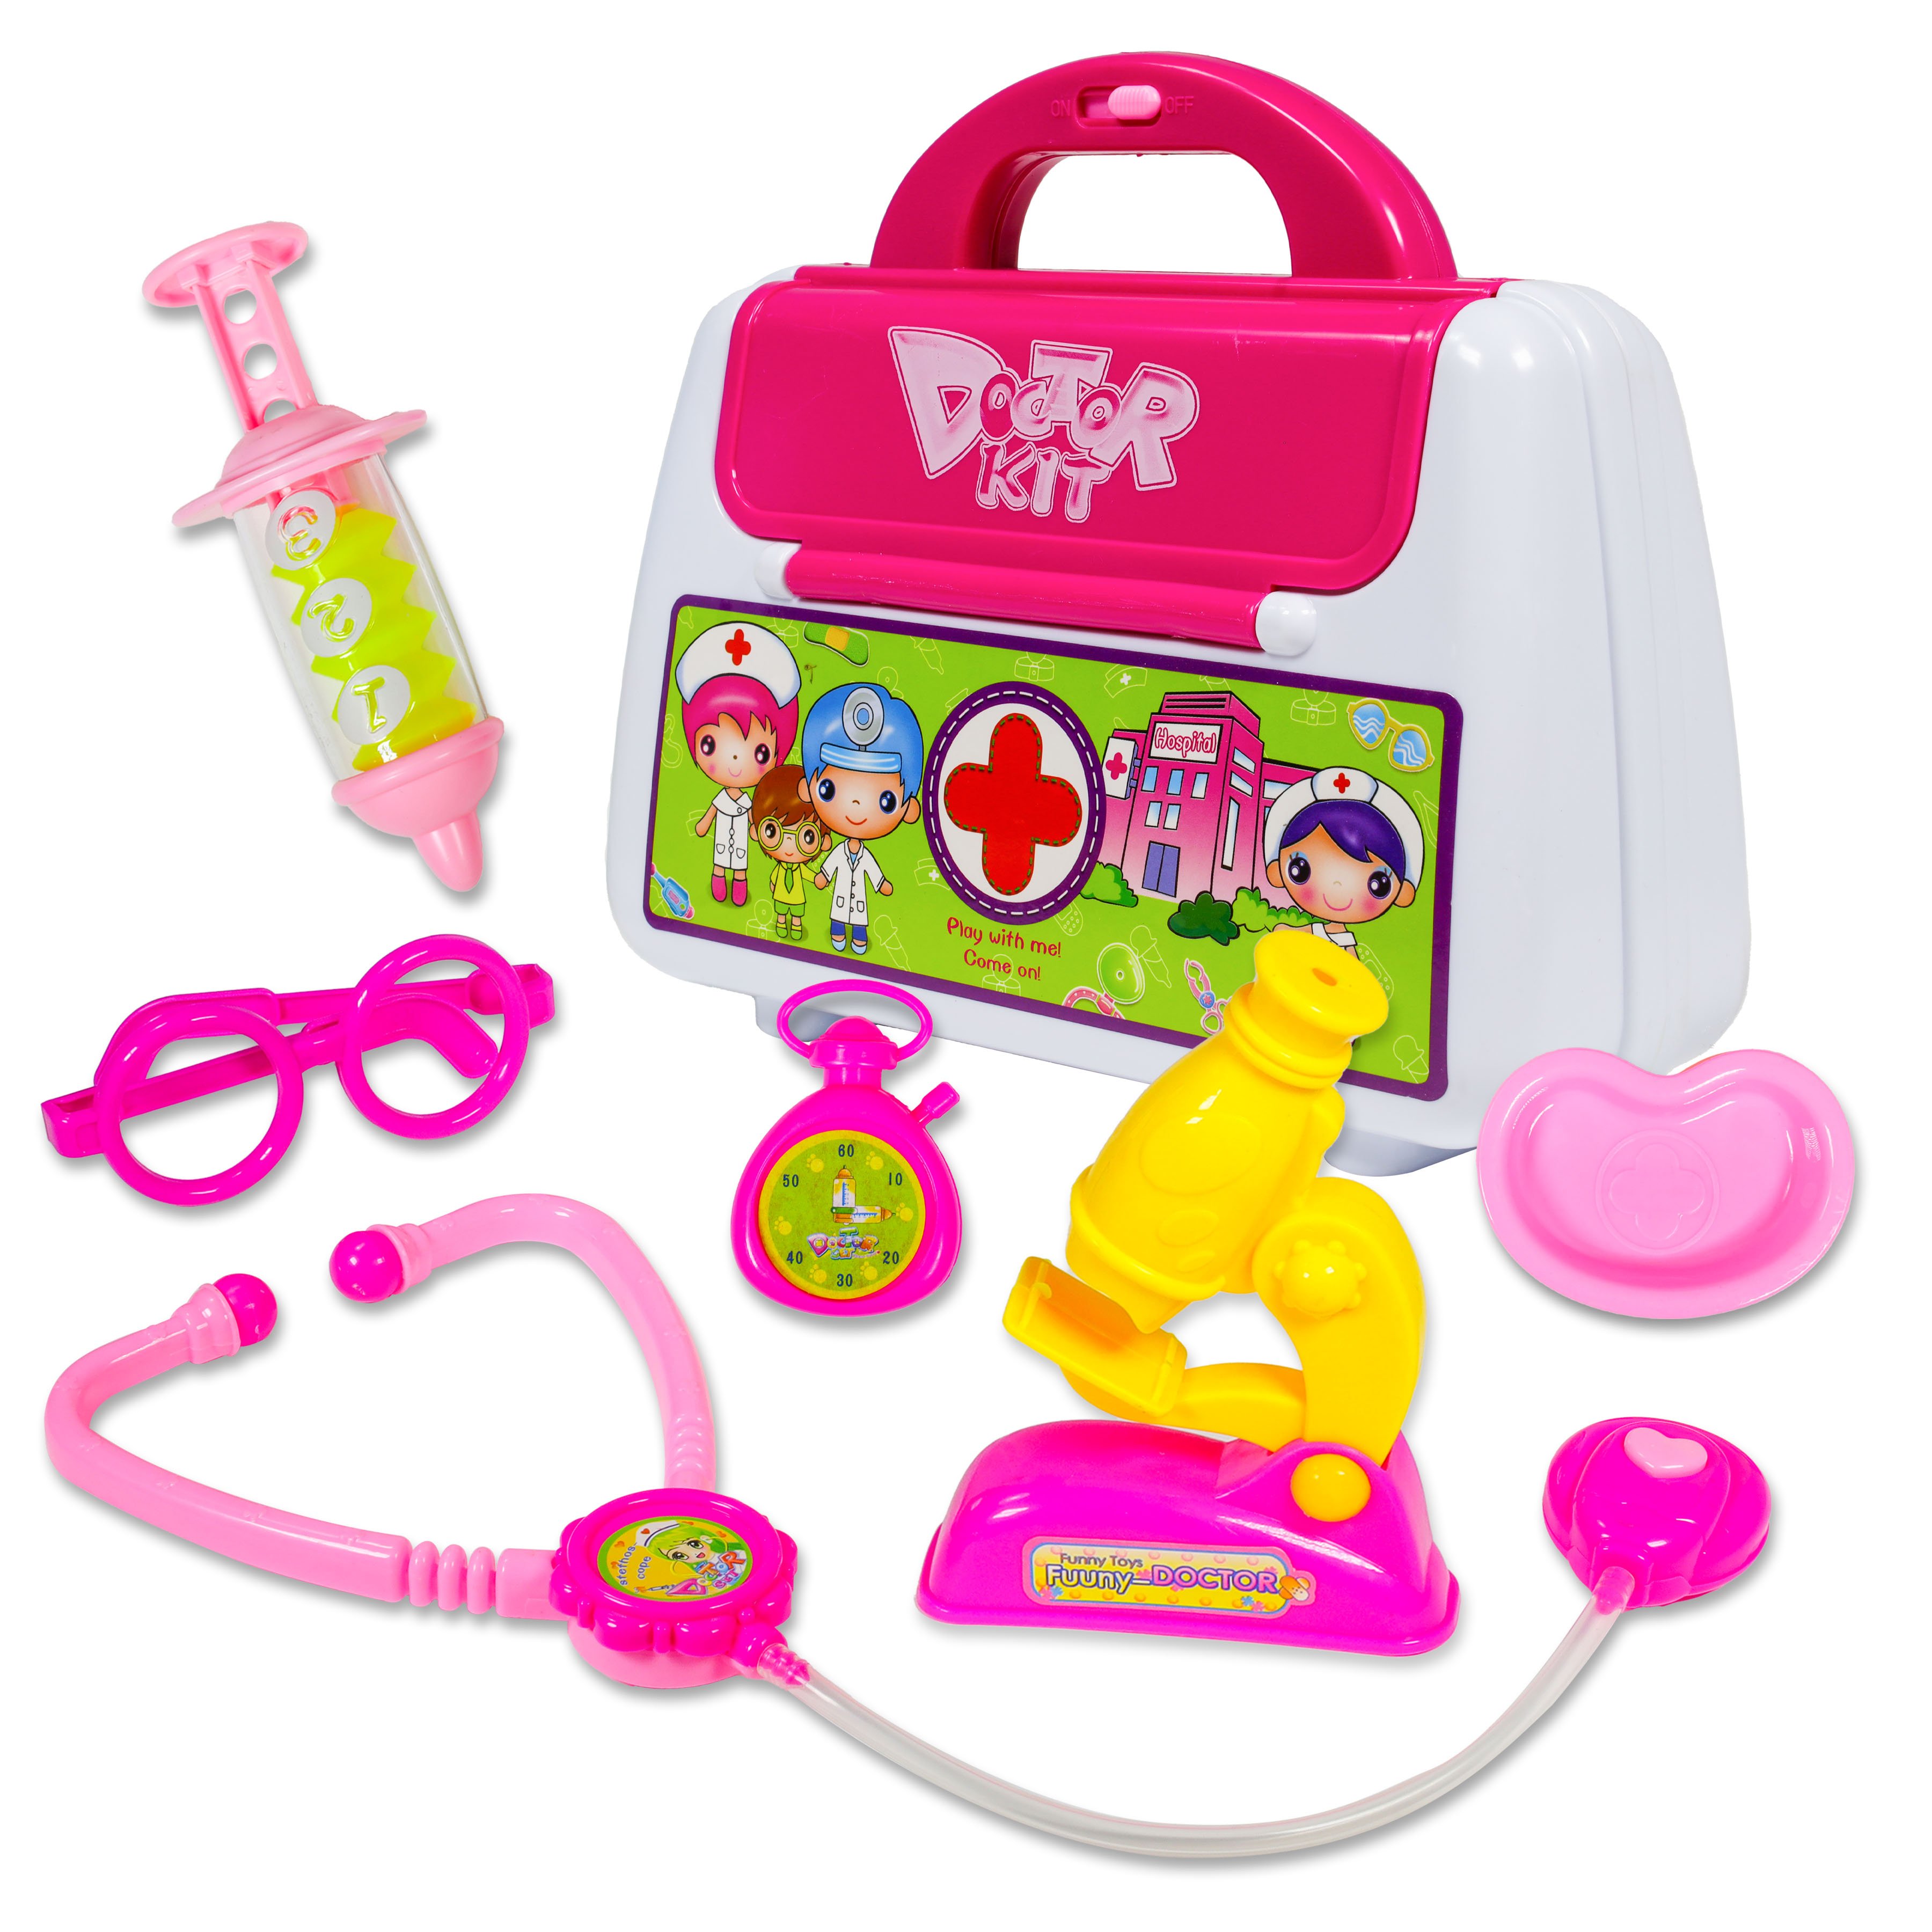 Kidplokio 7pc Pretend Play Doctor Kit for Kids with Stethoscope, Storage Bin, Girls Ages 3-8, Pink